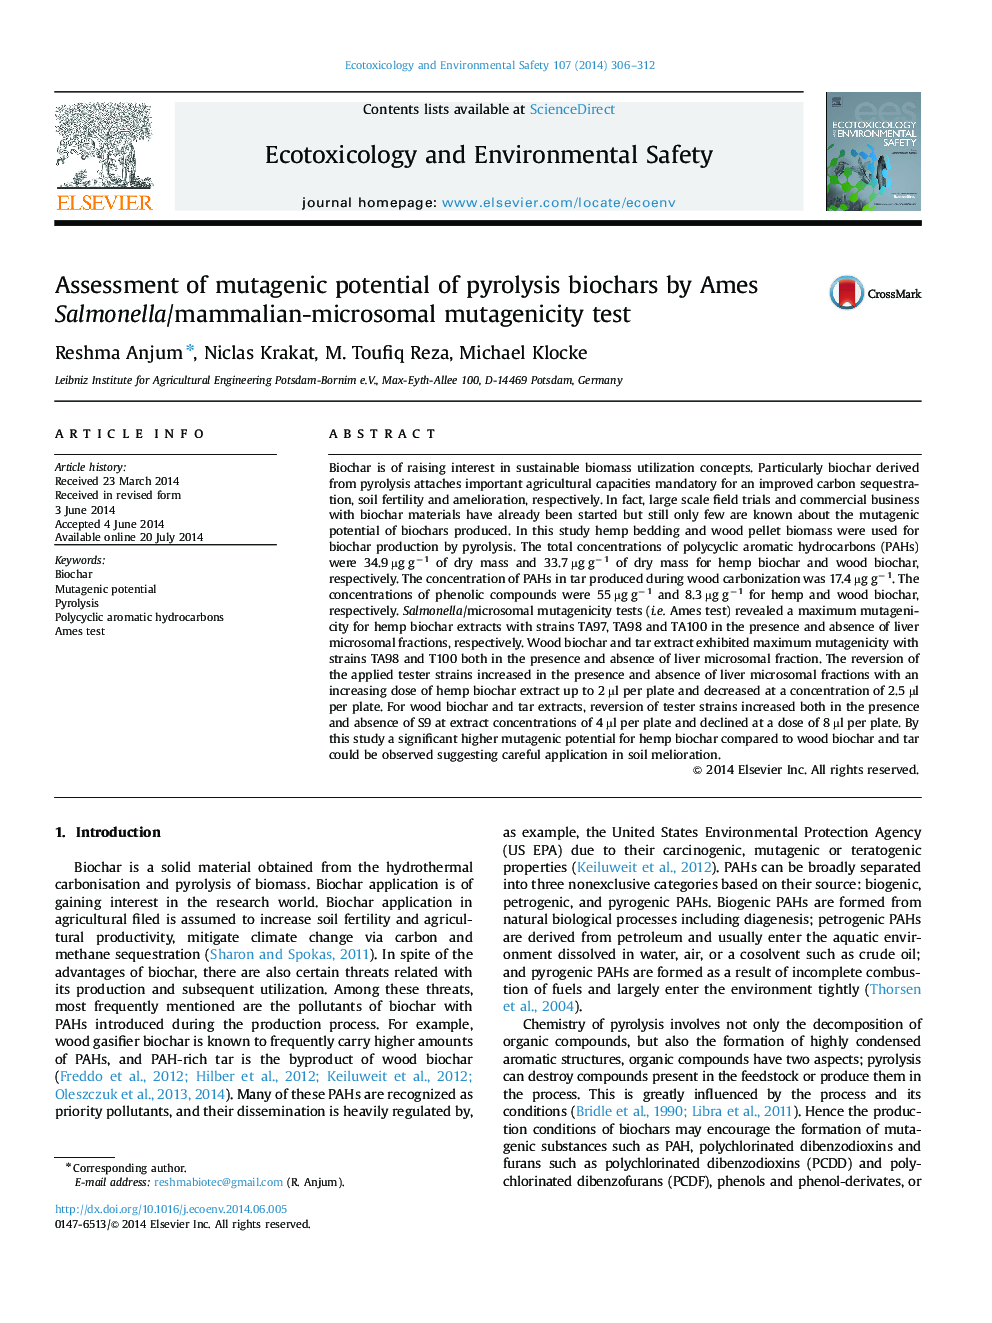 Assessment of mutagenic potential of pyrolysis biochars by Ames Salmonella/mammalian-microsomal mutagenicity test